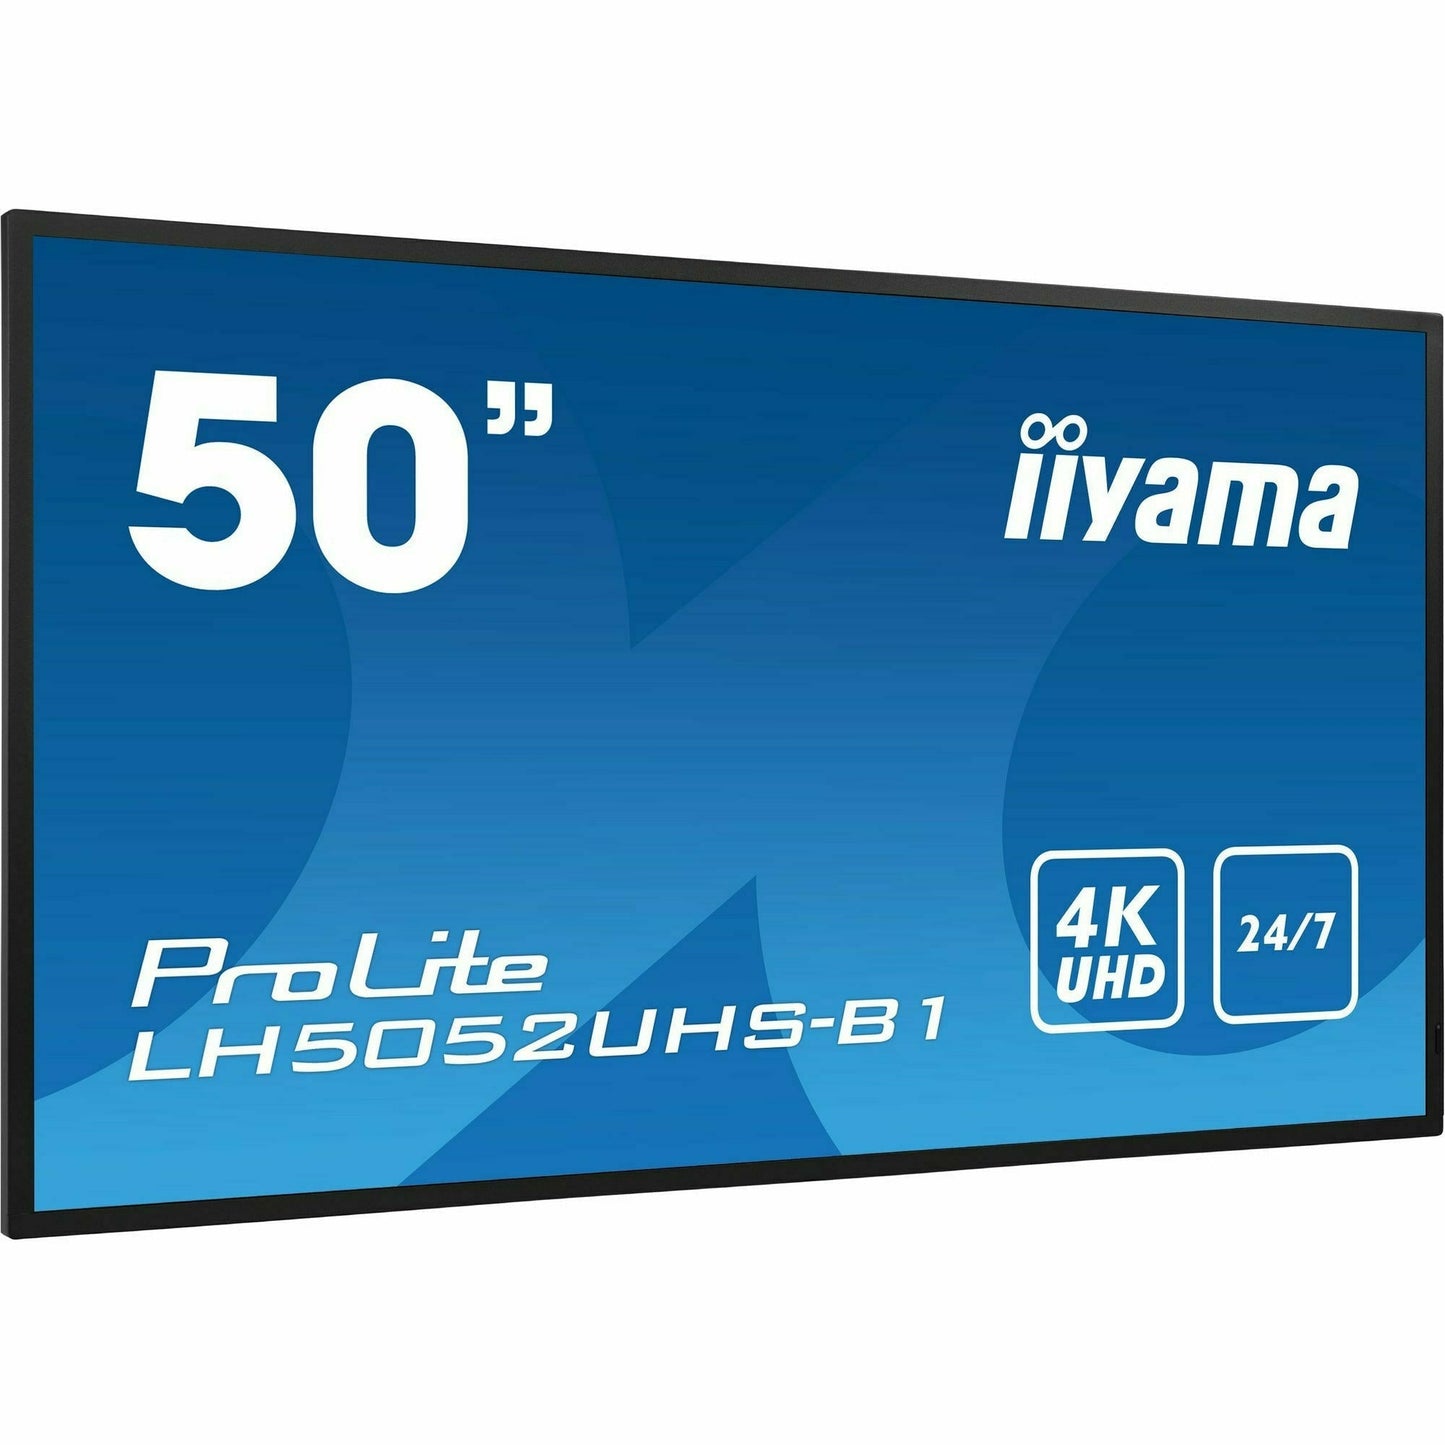 Dark Cyan iiyama ProLite LH5052UHS-B1 50" LFD